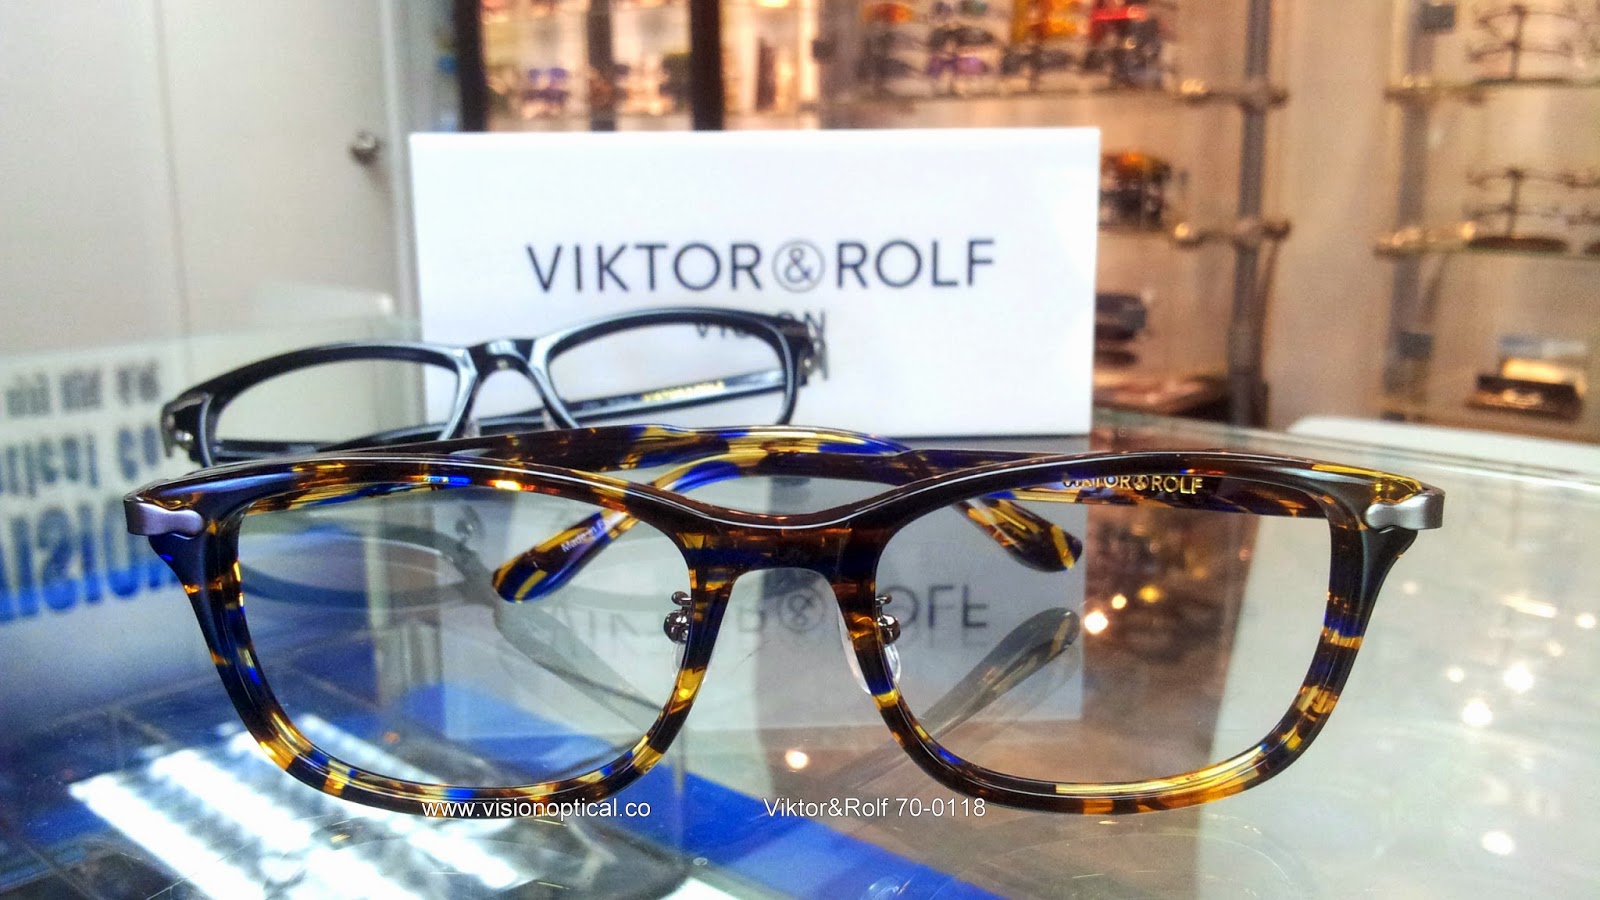 Viktor & Rolf 70-0118設計師的彩藍花料眼鏡架